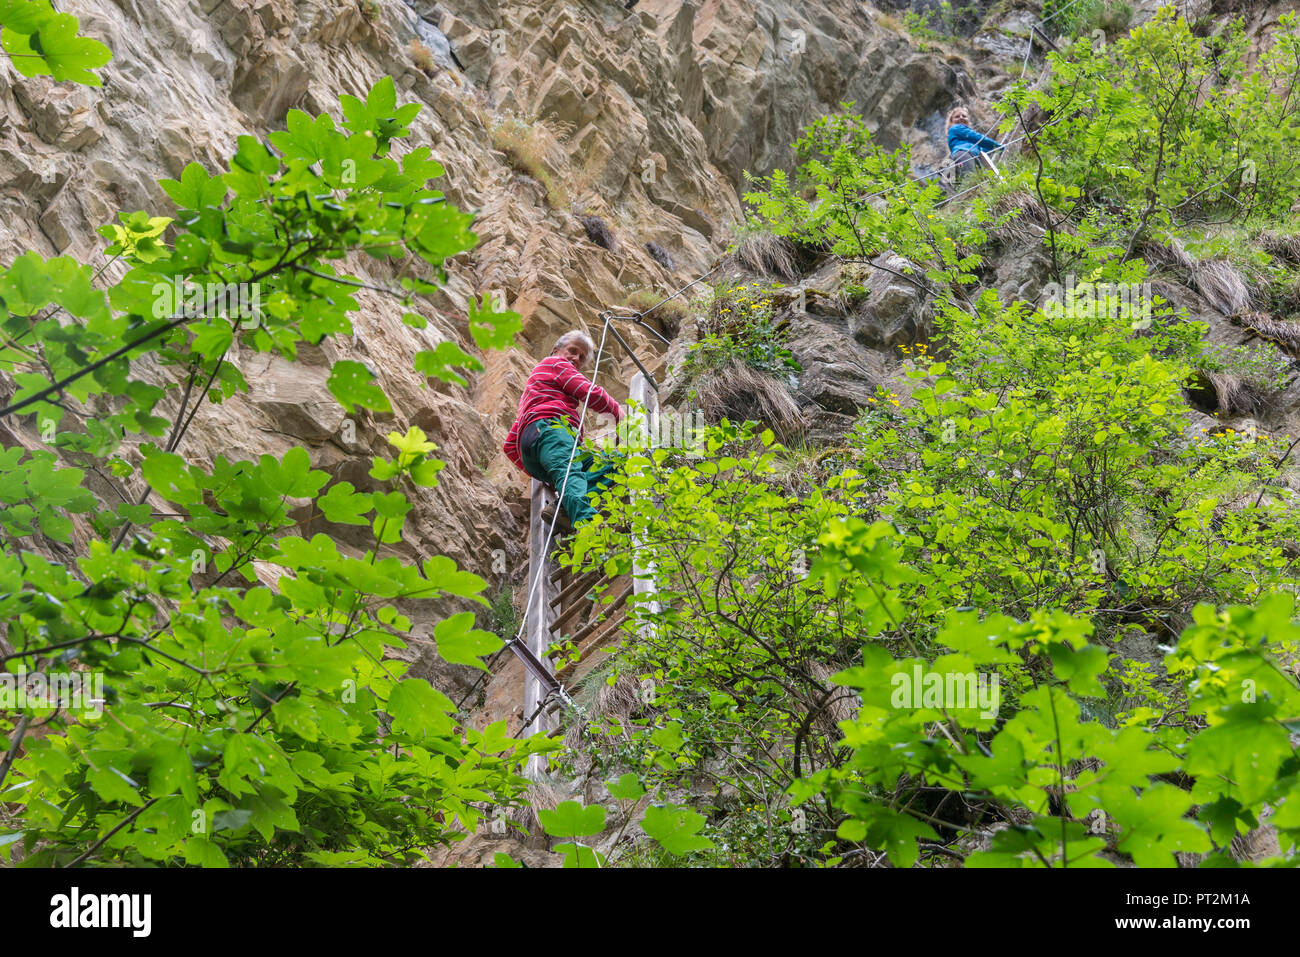 Switzerland, canton Valais, district Leuk, Albinen, Albinenleitern, hike, Leukerbad to Albinen, hikers, man climbing Albinenleitern Stock Photo